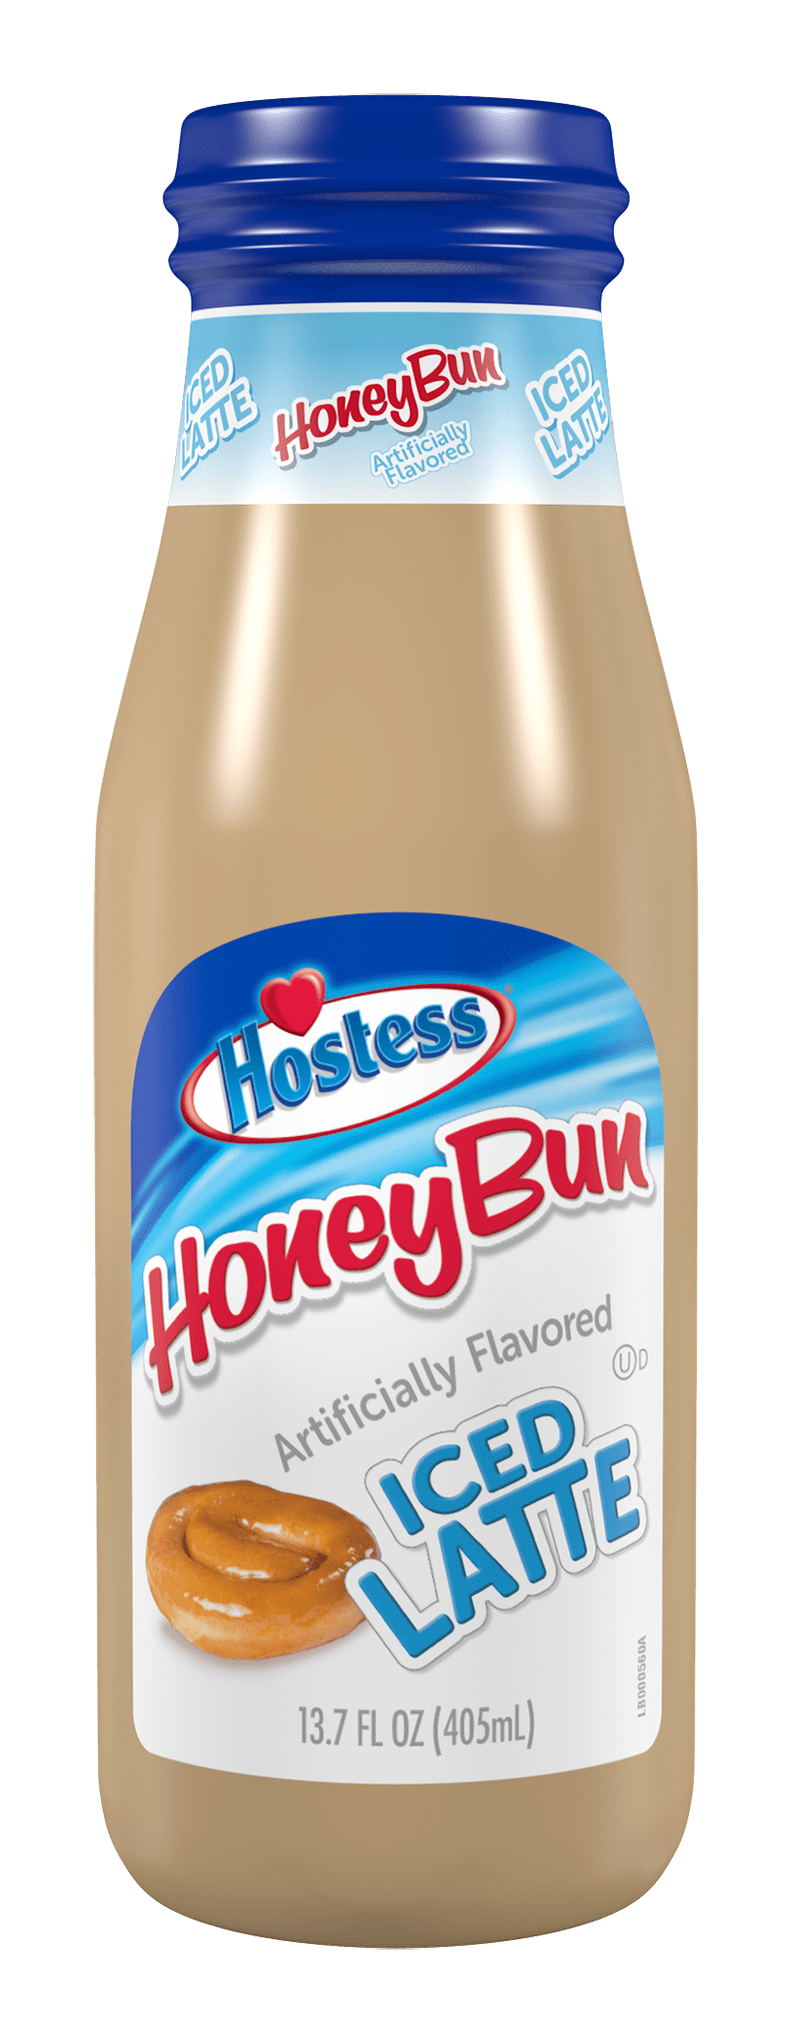 Hostess Honey Bun Iced Latte